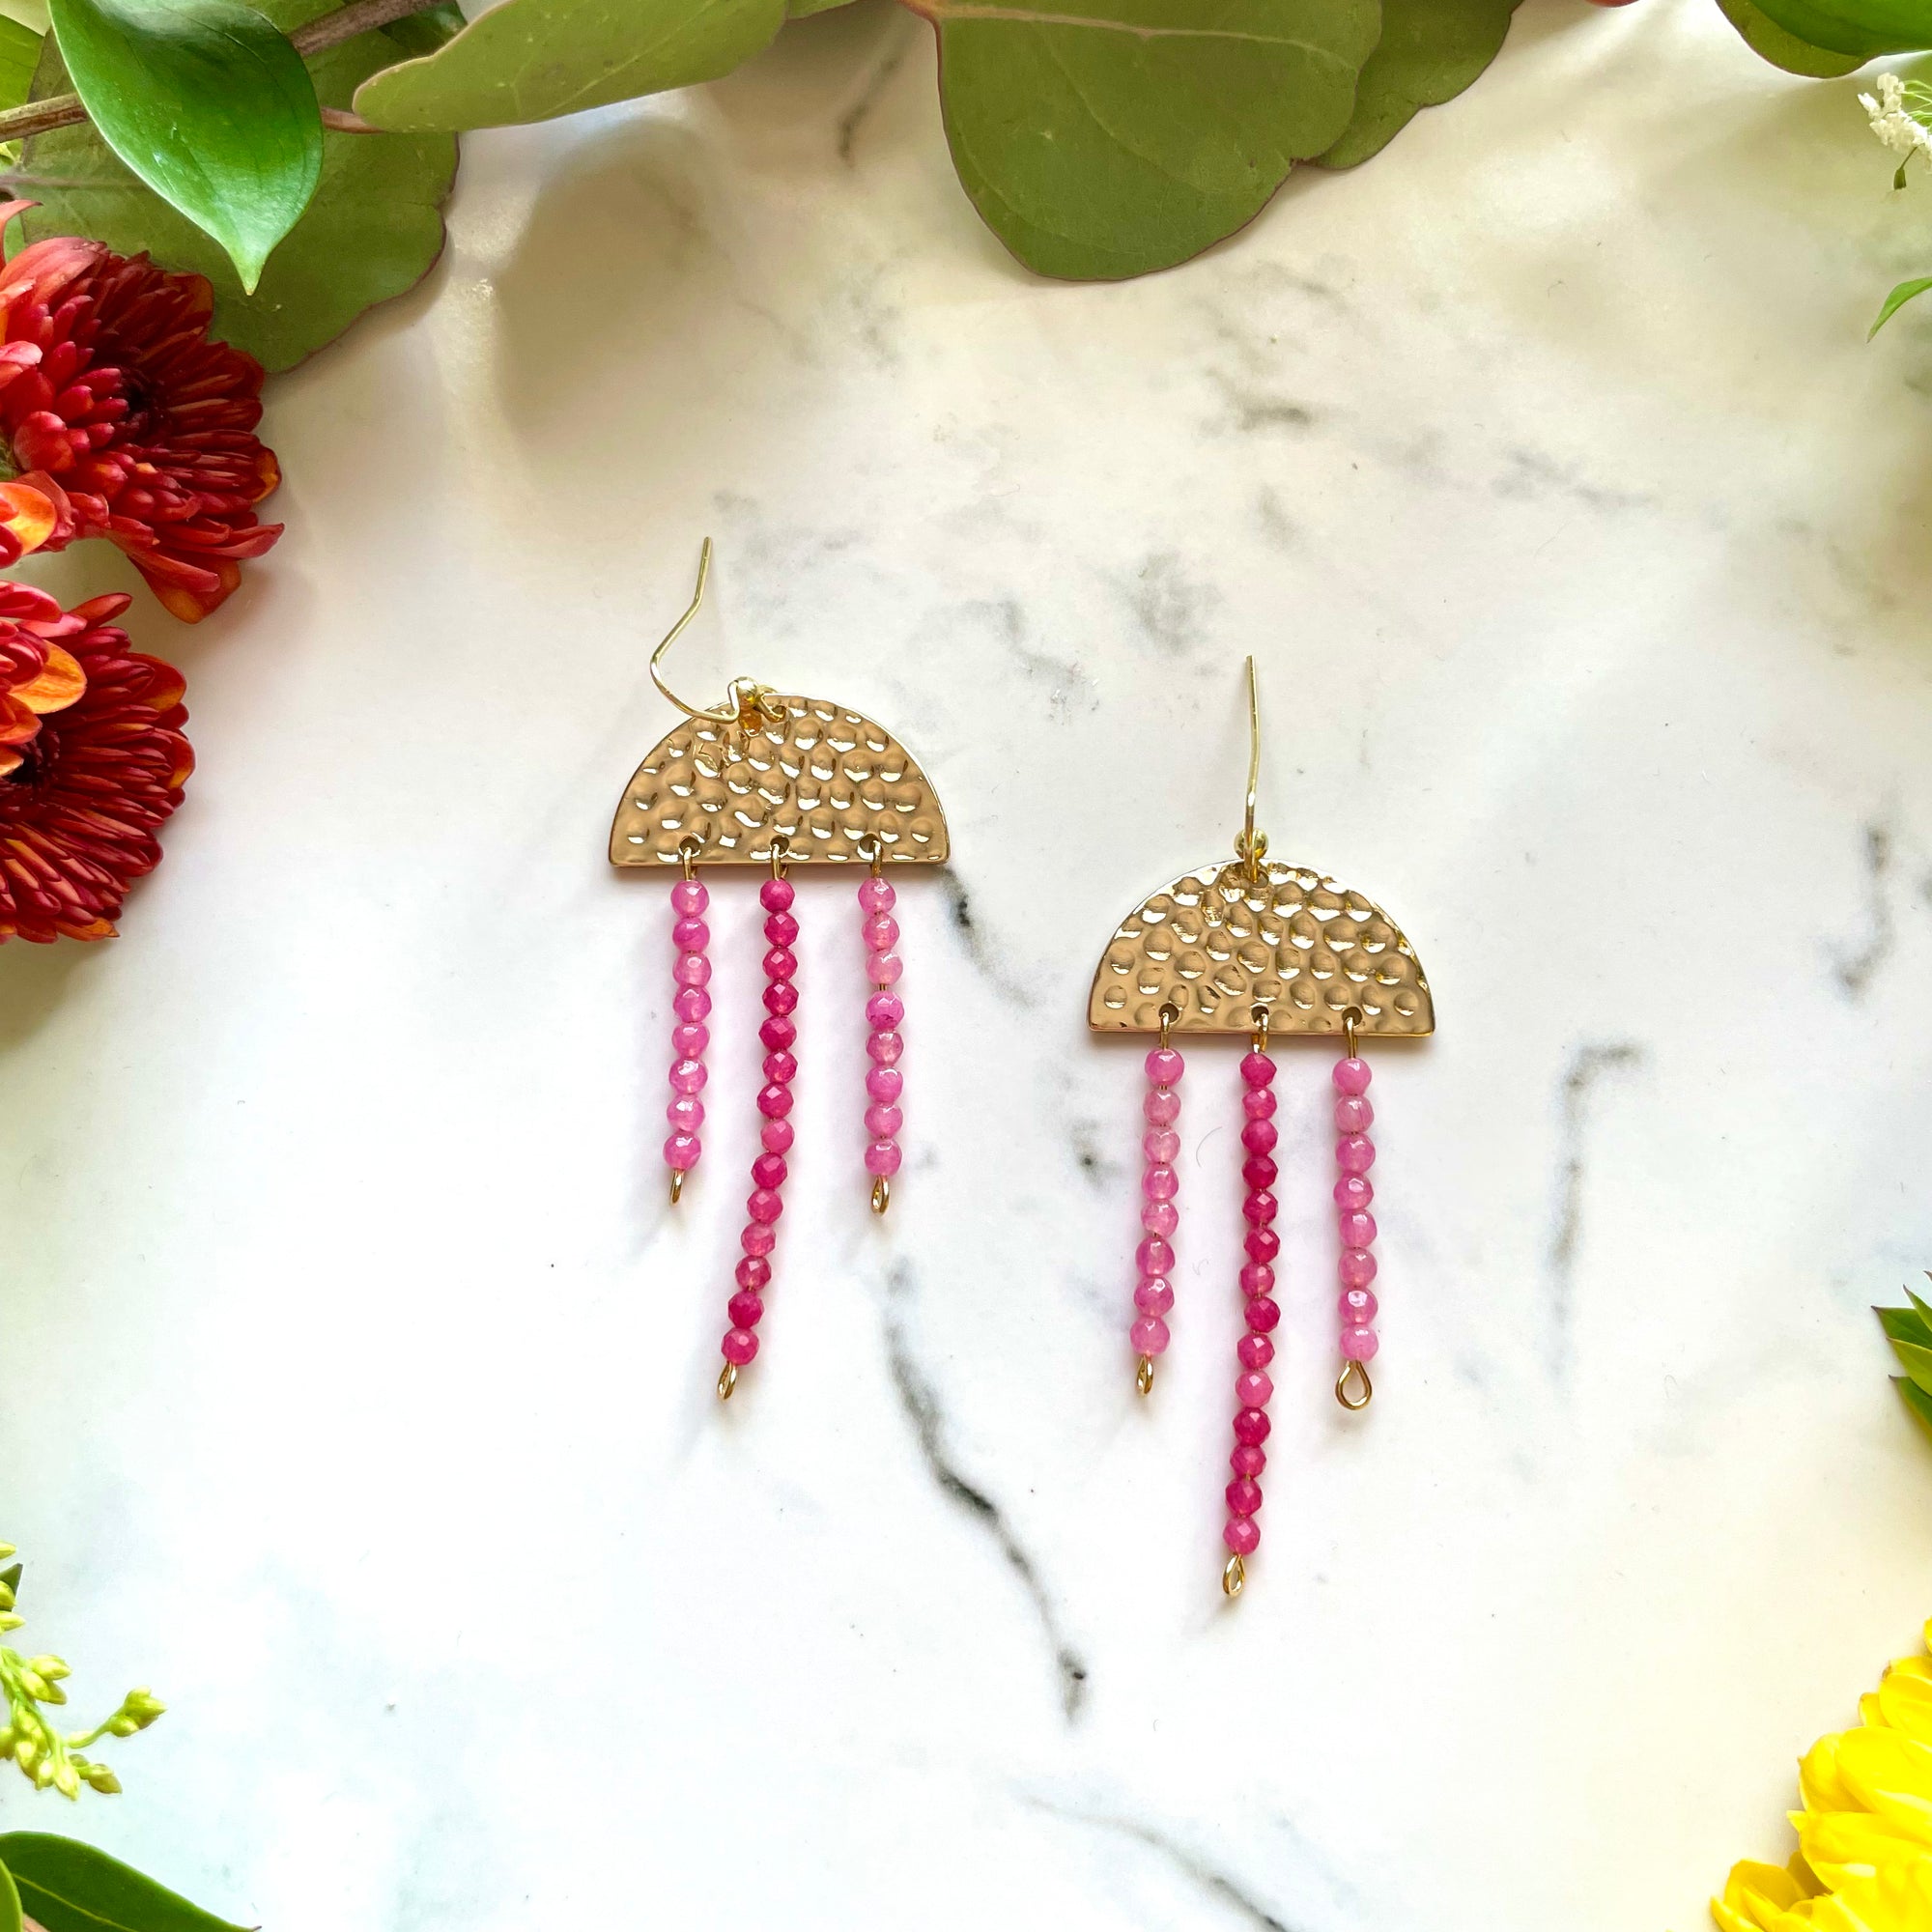 Gold Half Moon Earrings with Pink Jade Bead Dangles